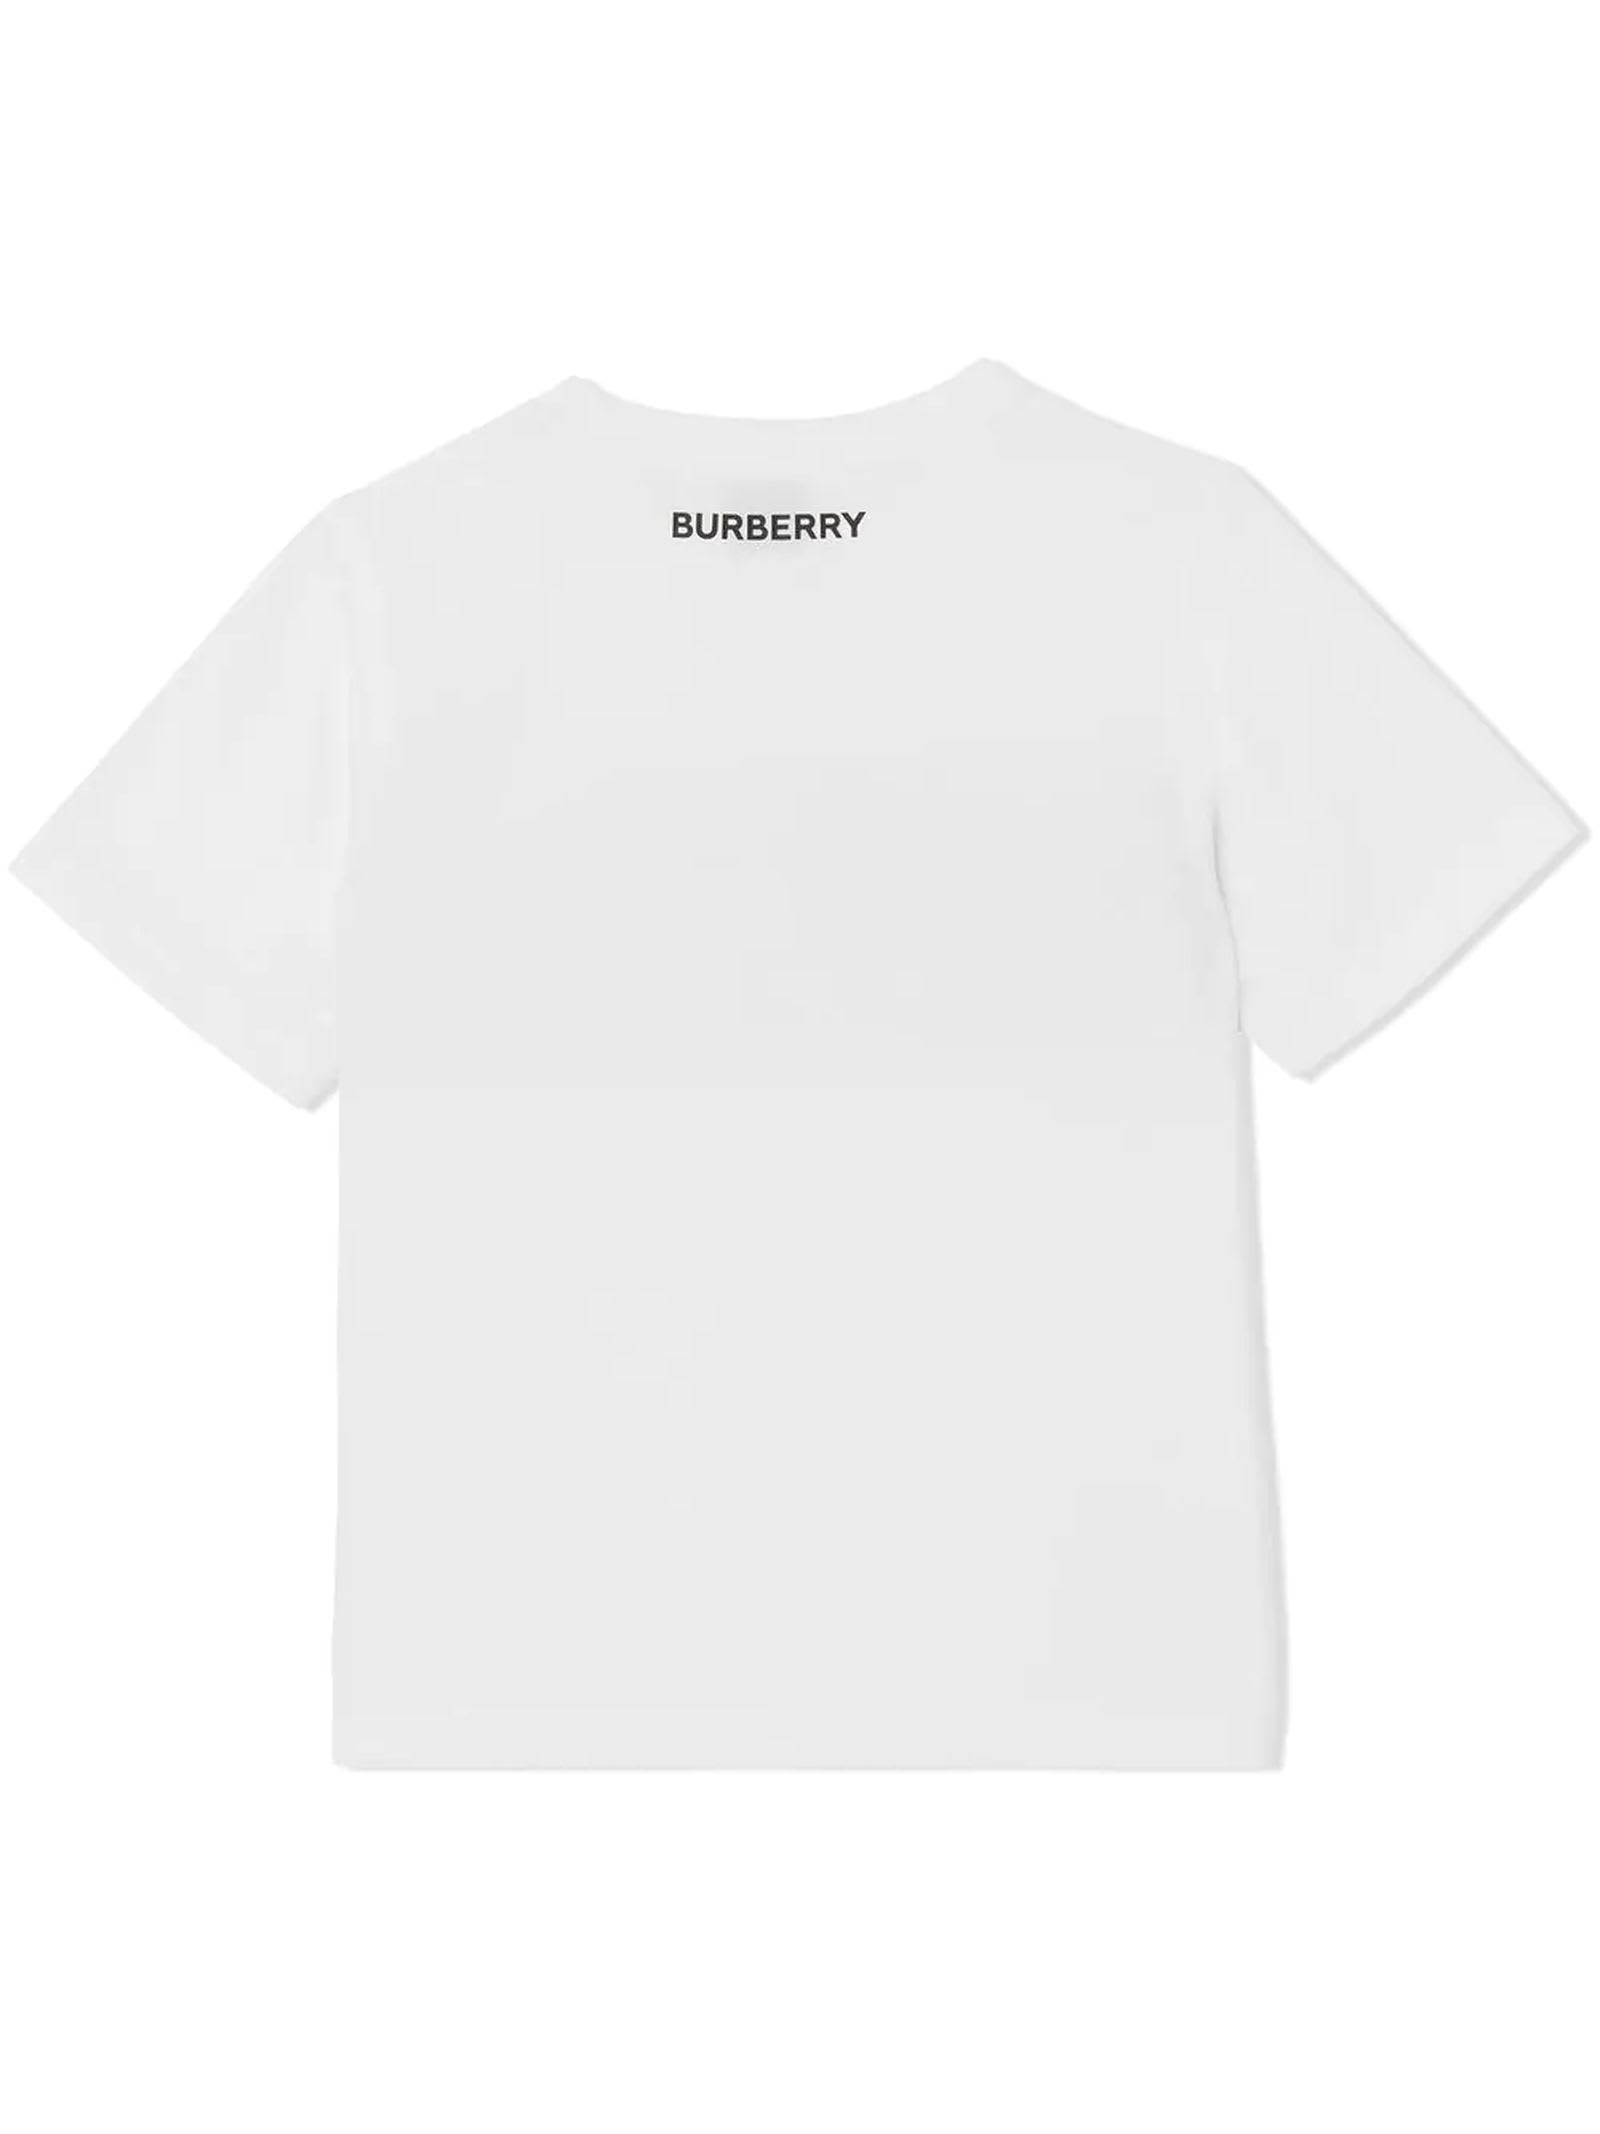 Shop Burberry White Cotton Tshirt